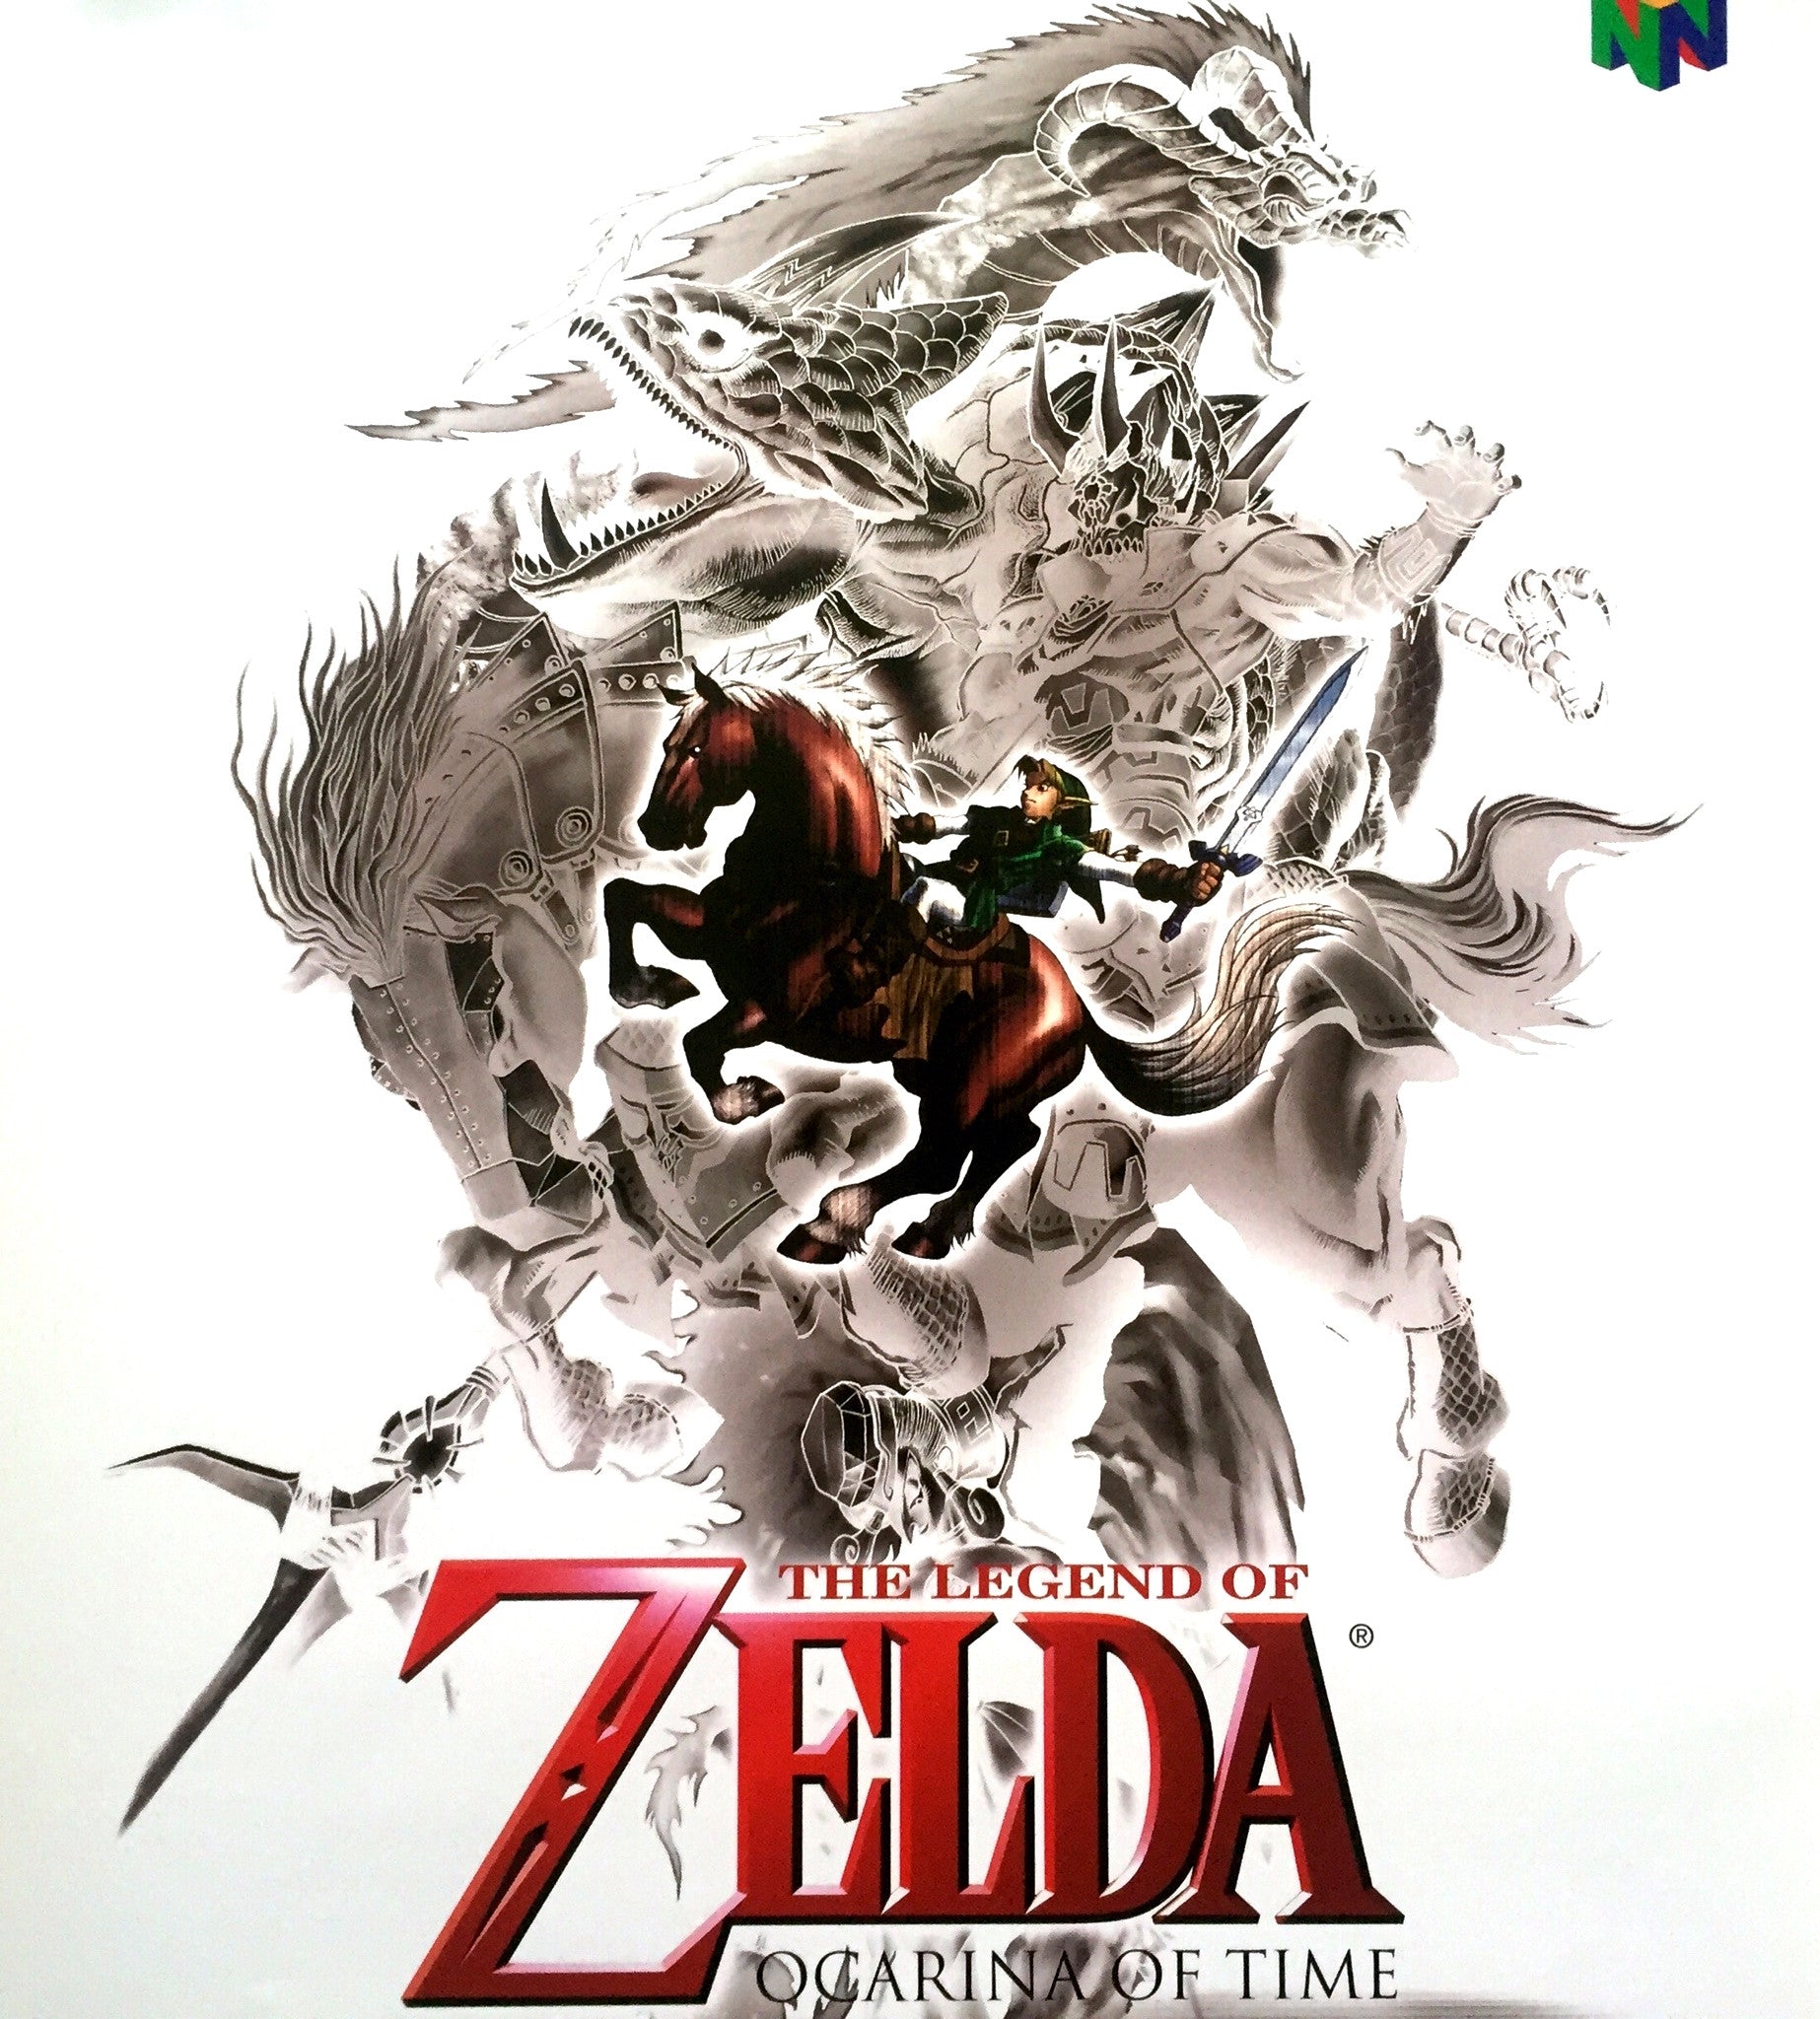 The Legend of Zelda: Ocarina of Time (B2) Japanese Promotional Poster #1